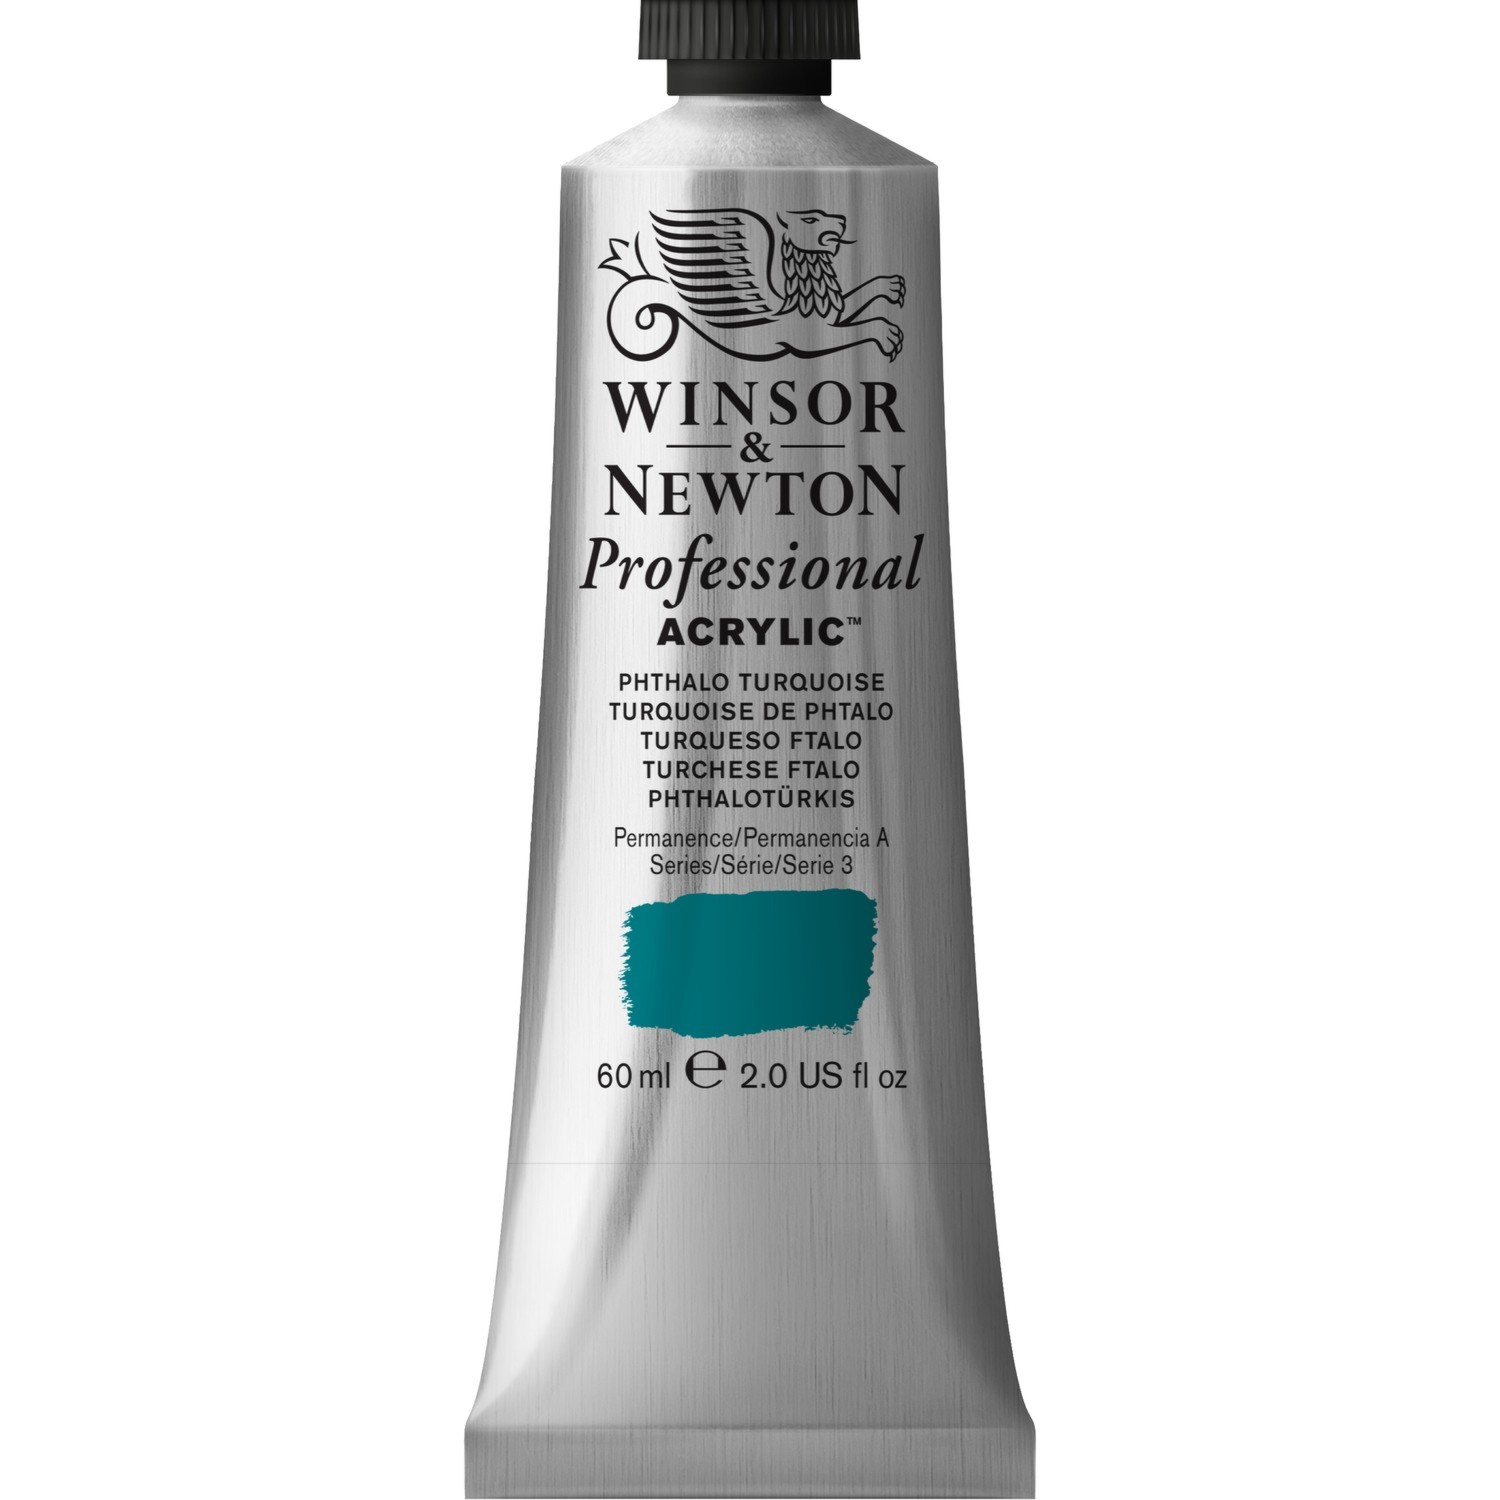 Winsor and Newton 60ml Professional Acrylic Paint - Phthalo Turquoise Image 1